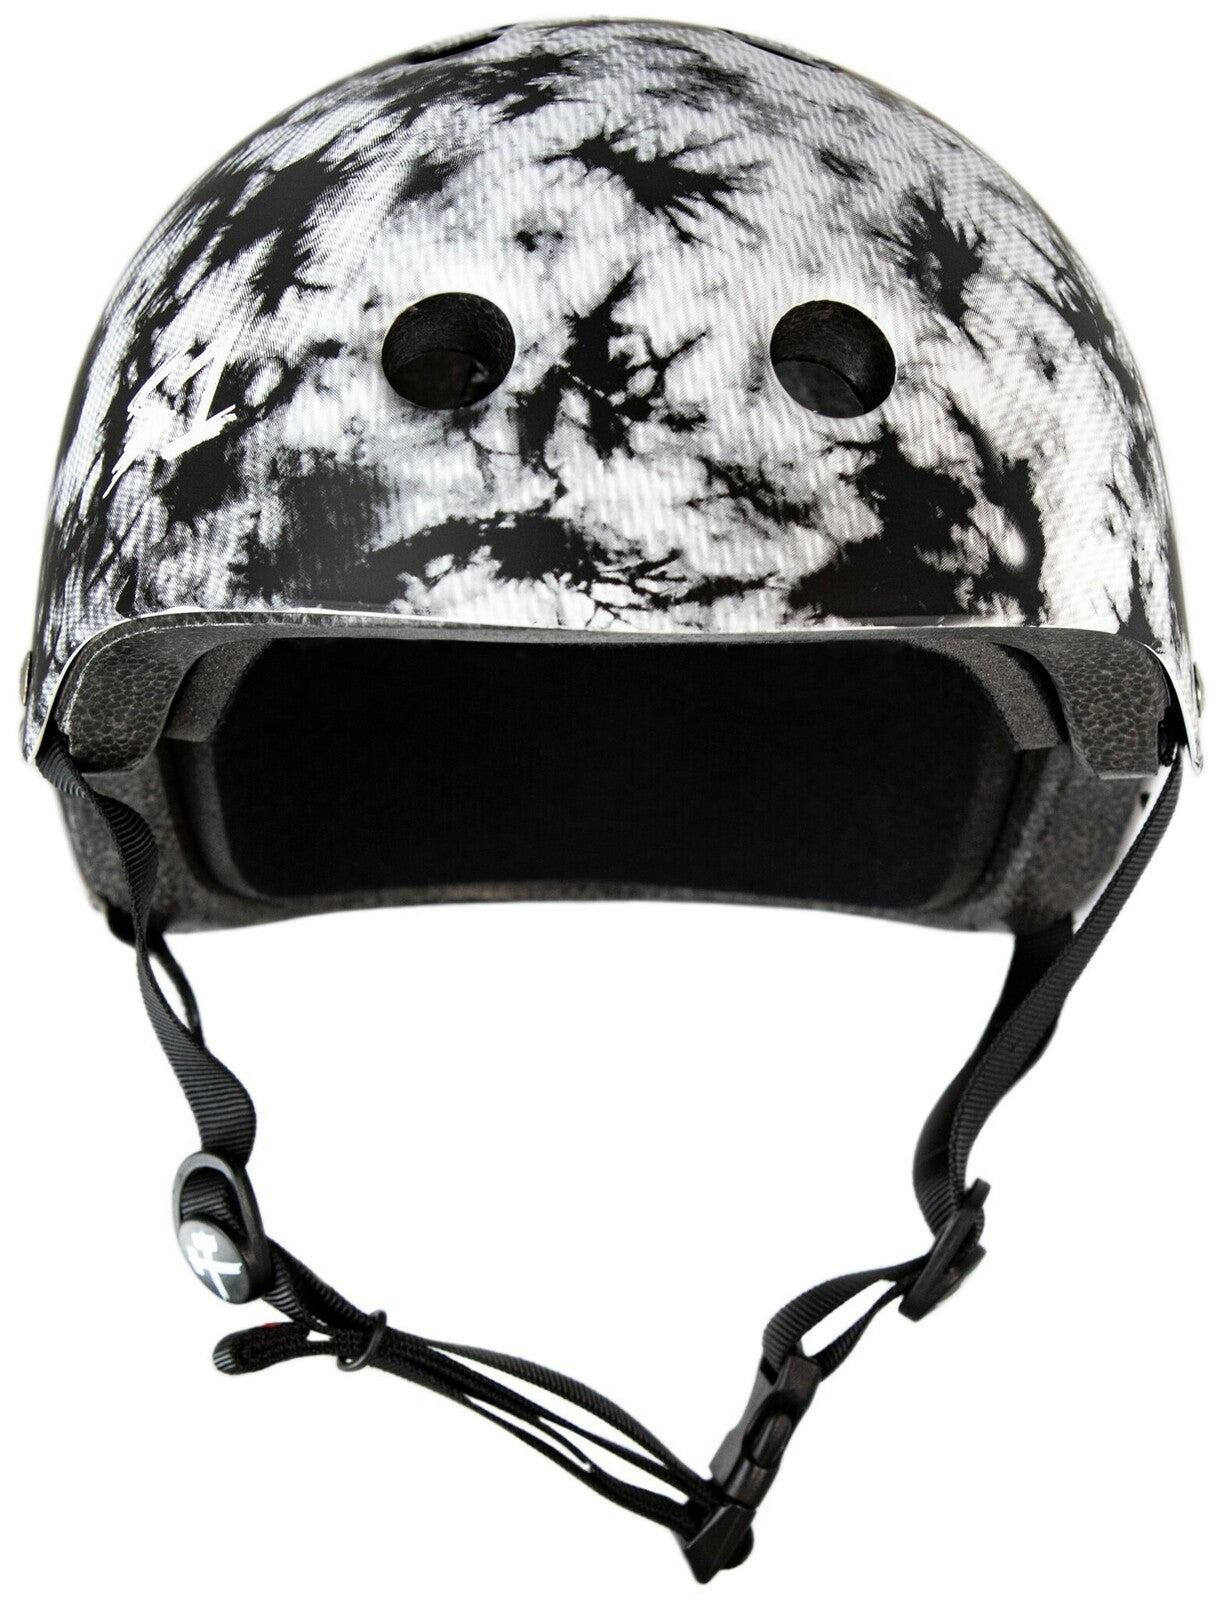 S1 Lifer Helmet - B/W Tie Dye